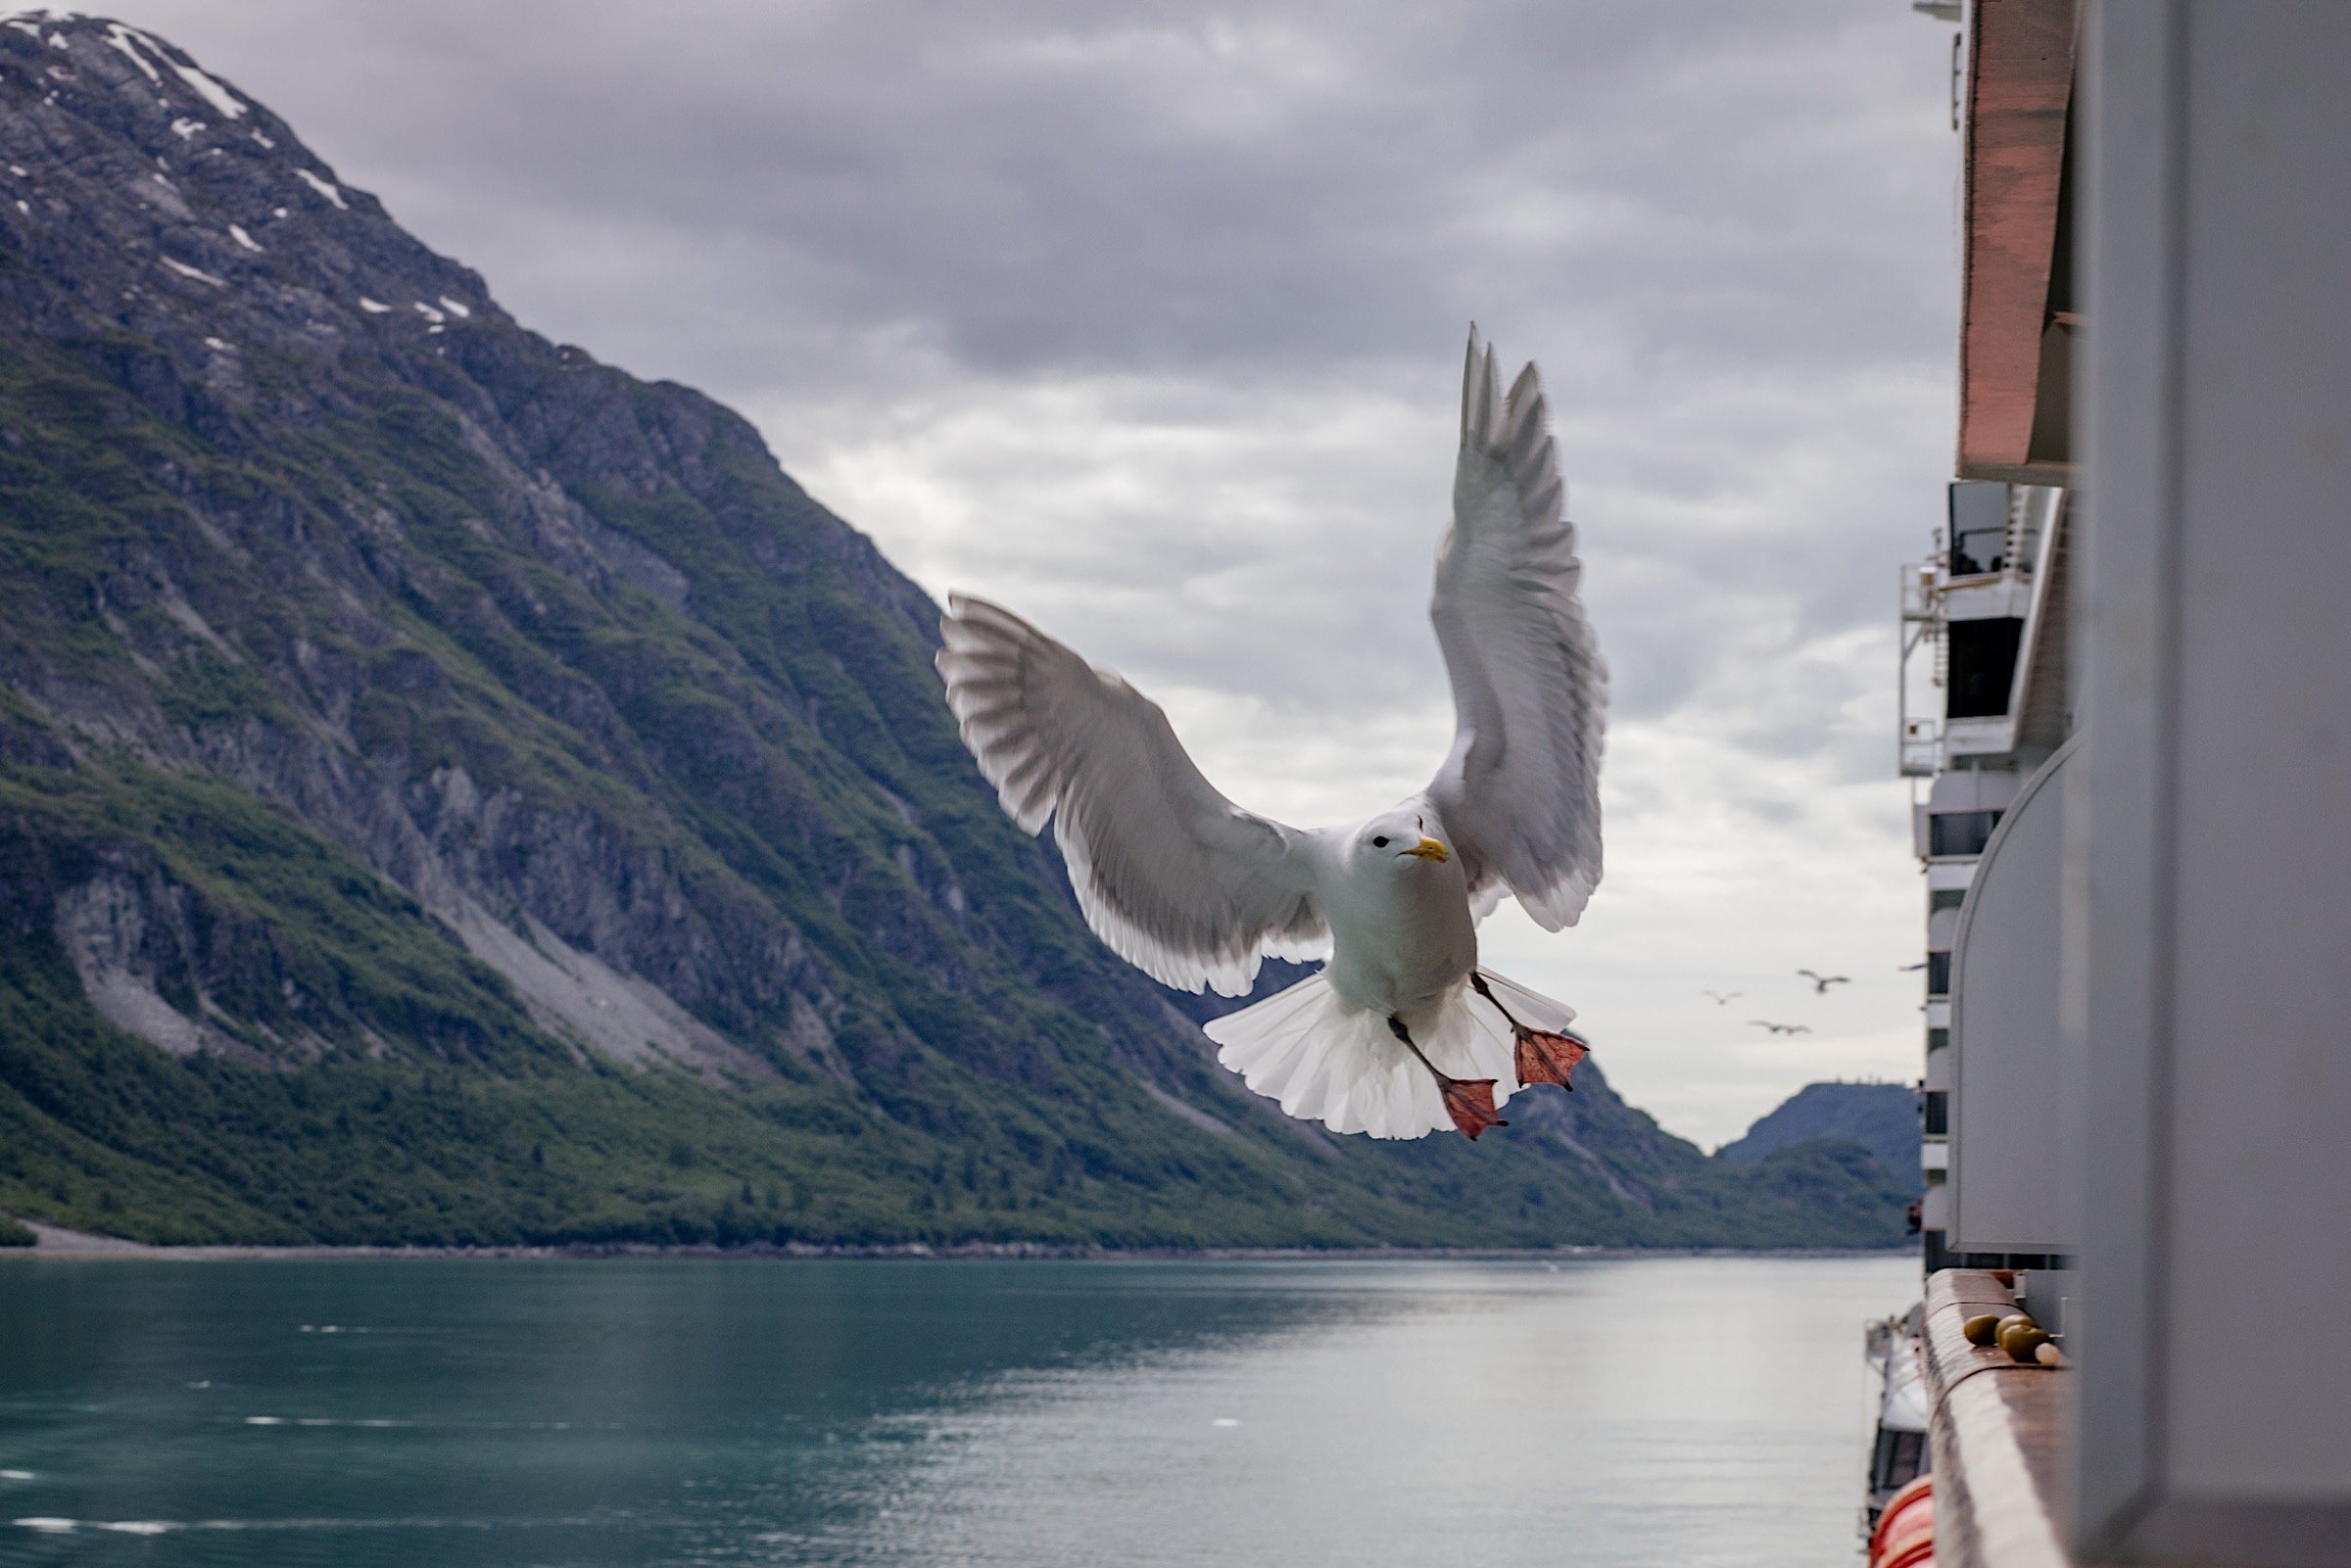 02_20180612_Alaskan Seagulls_Sam Walzade-7551.jpg